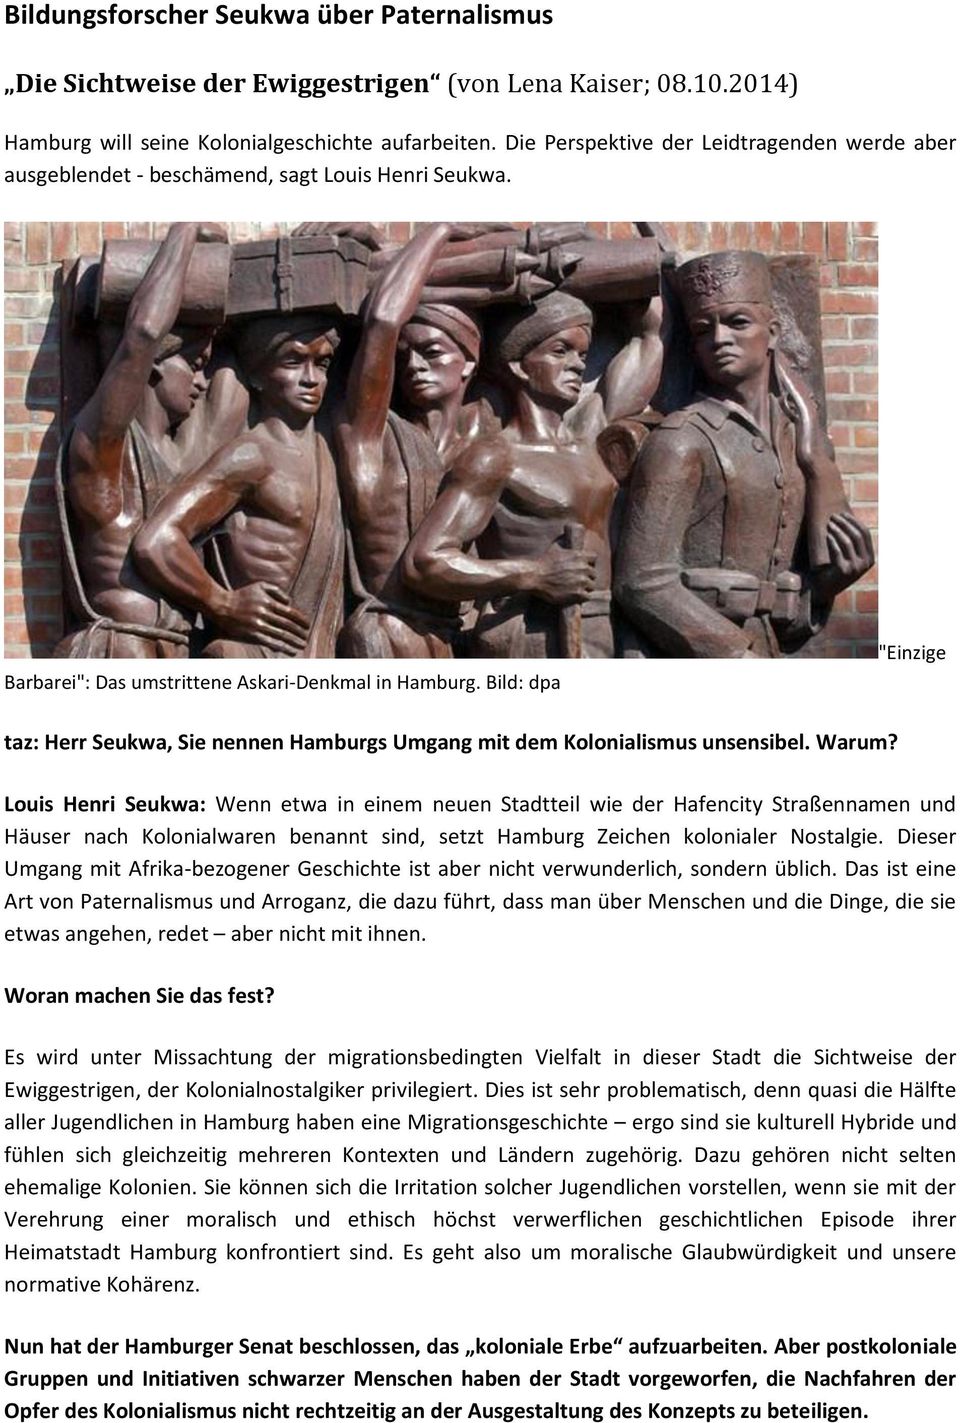 Bild: dpa "Einzige taz: Herr Seukwa, Sie nennen Hamburgs Umgang mit dem Kolonialismus unsensibel. Warum?